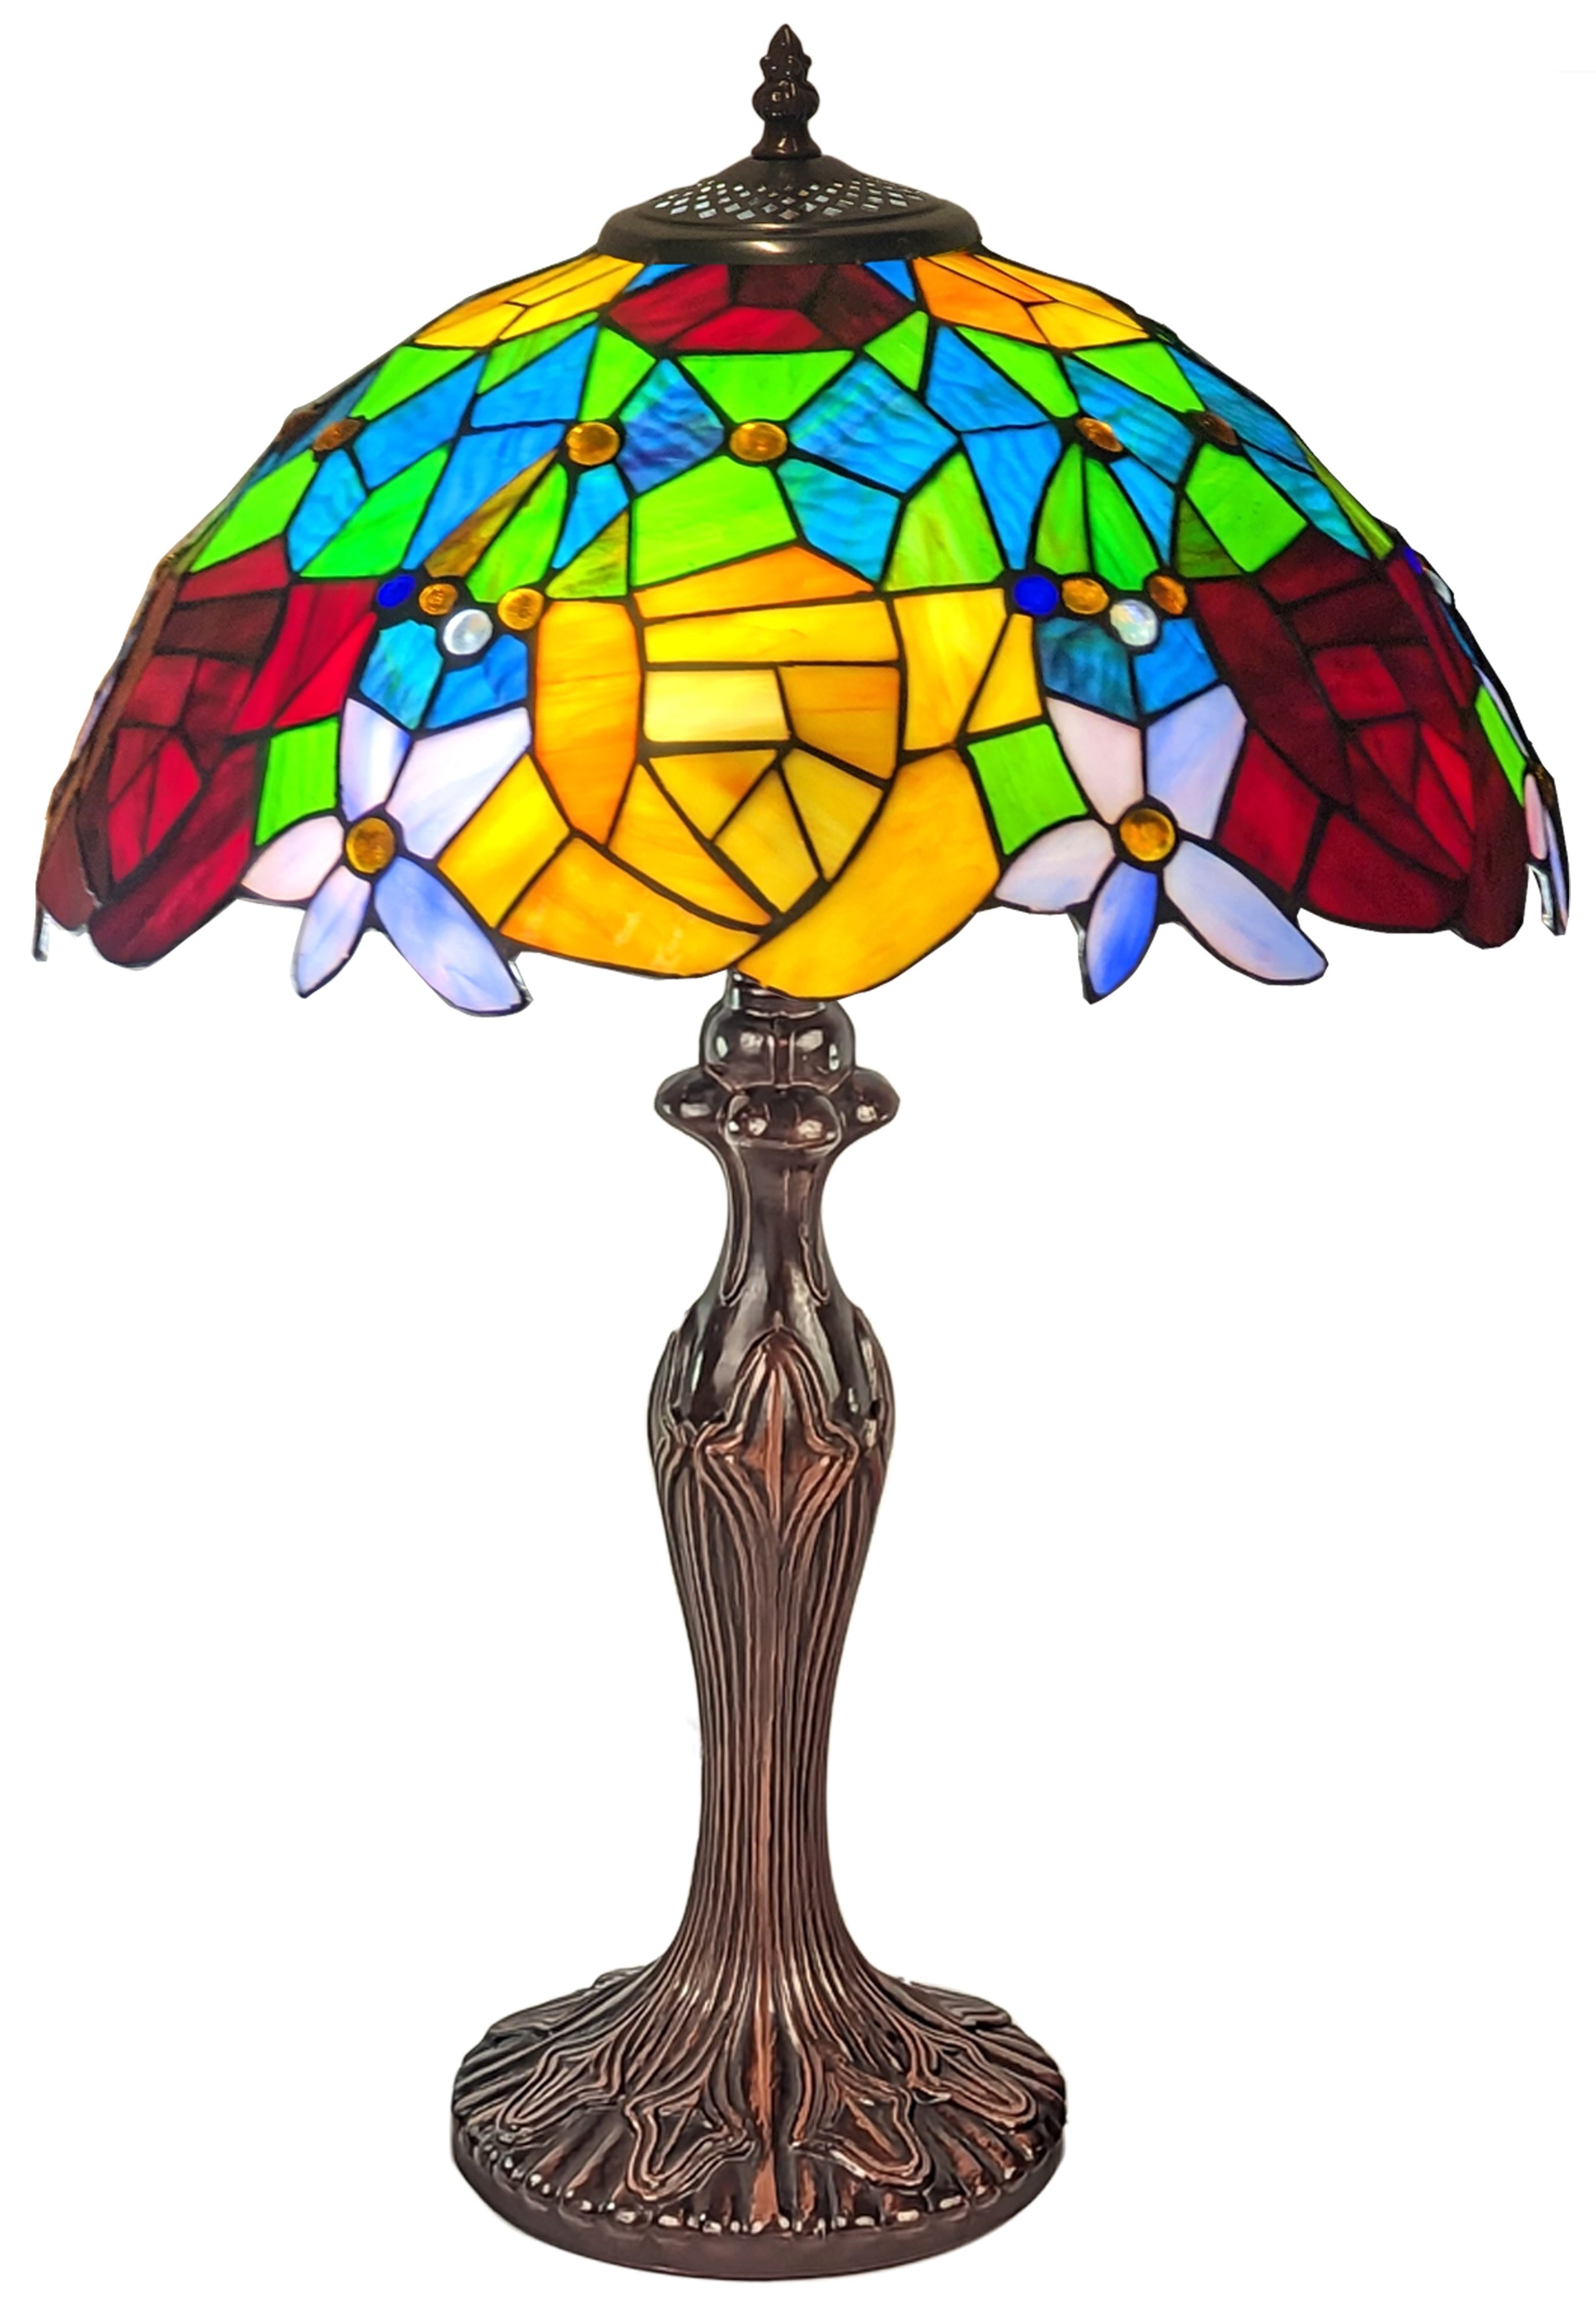 Large Rose Snowdrop Tiffany Table Lamp 59cm 